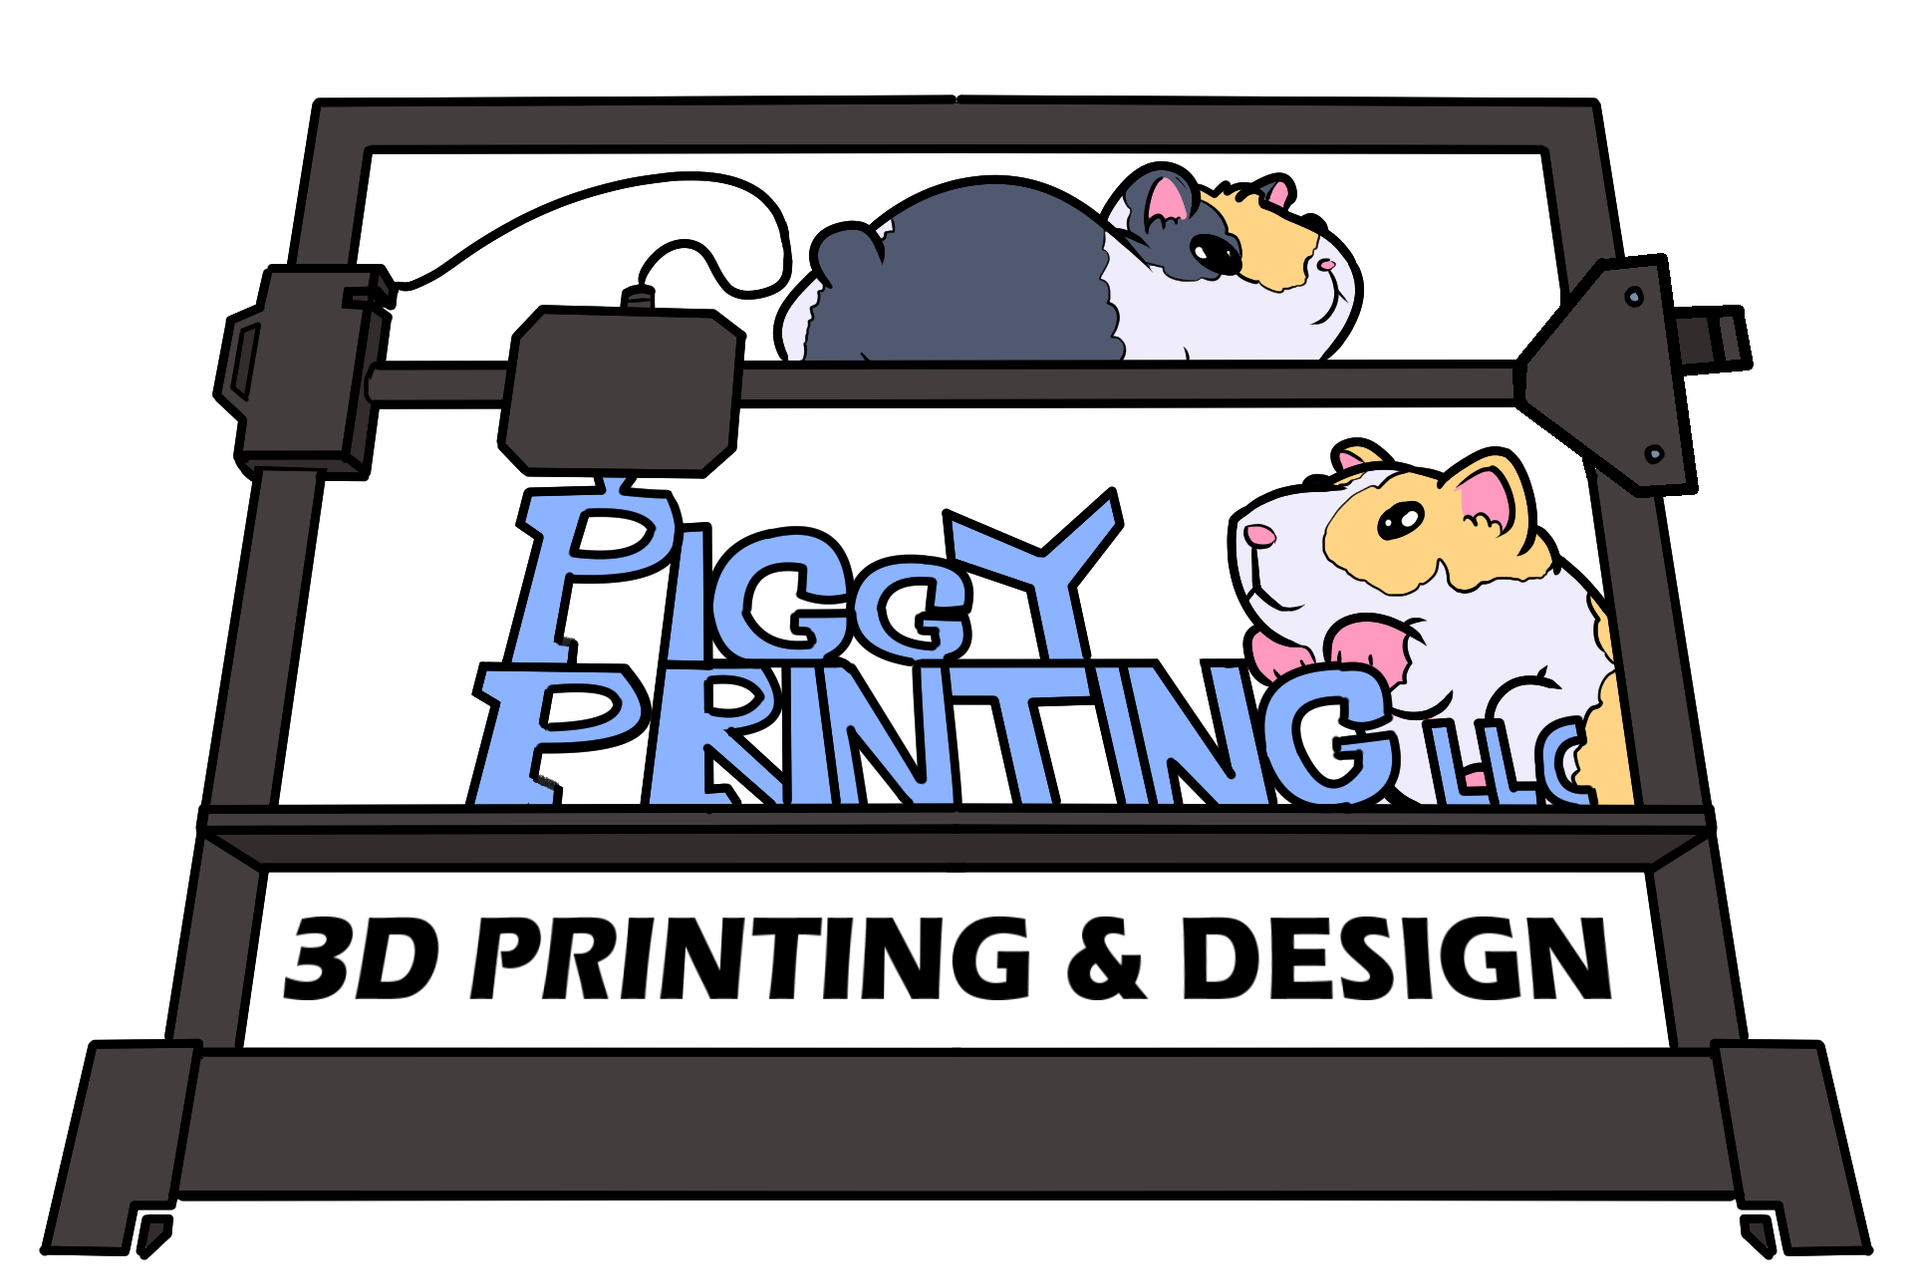 Piggy Printing LLC